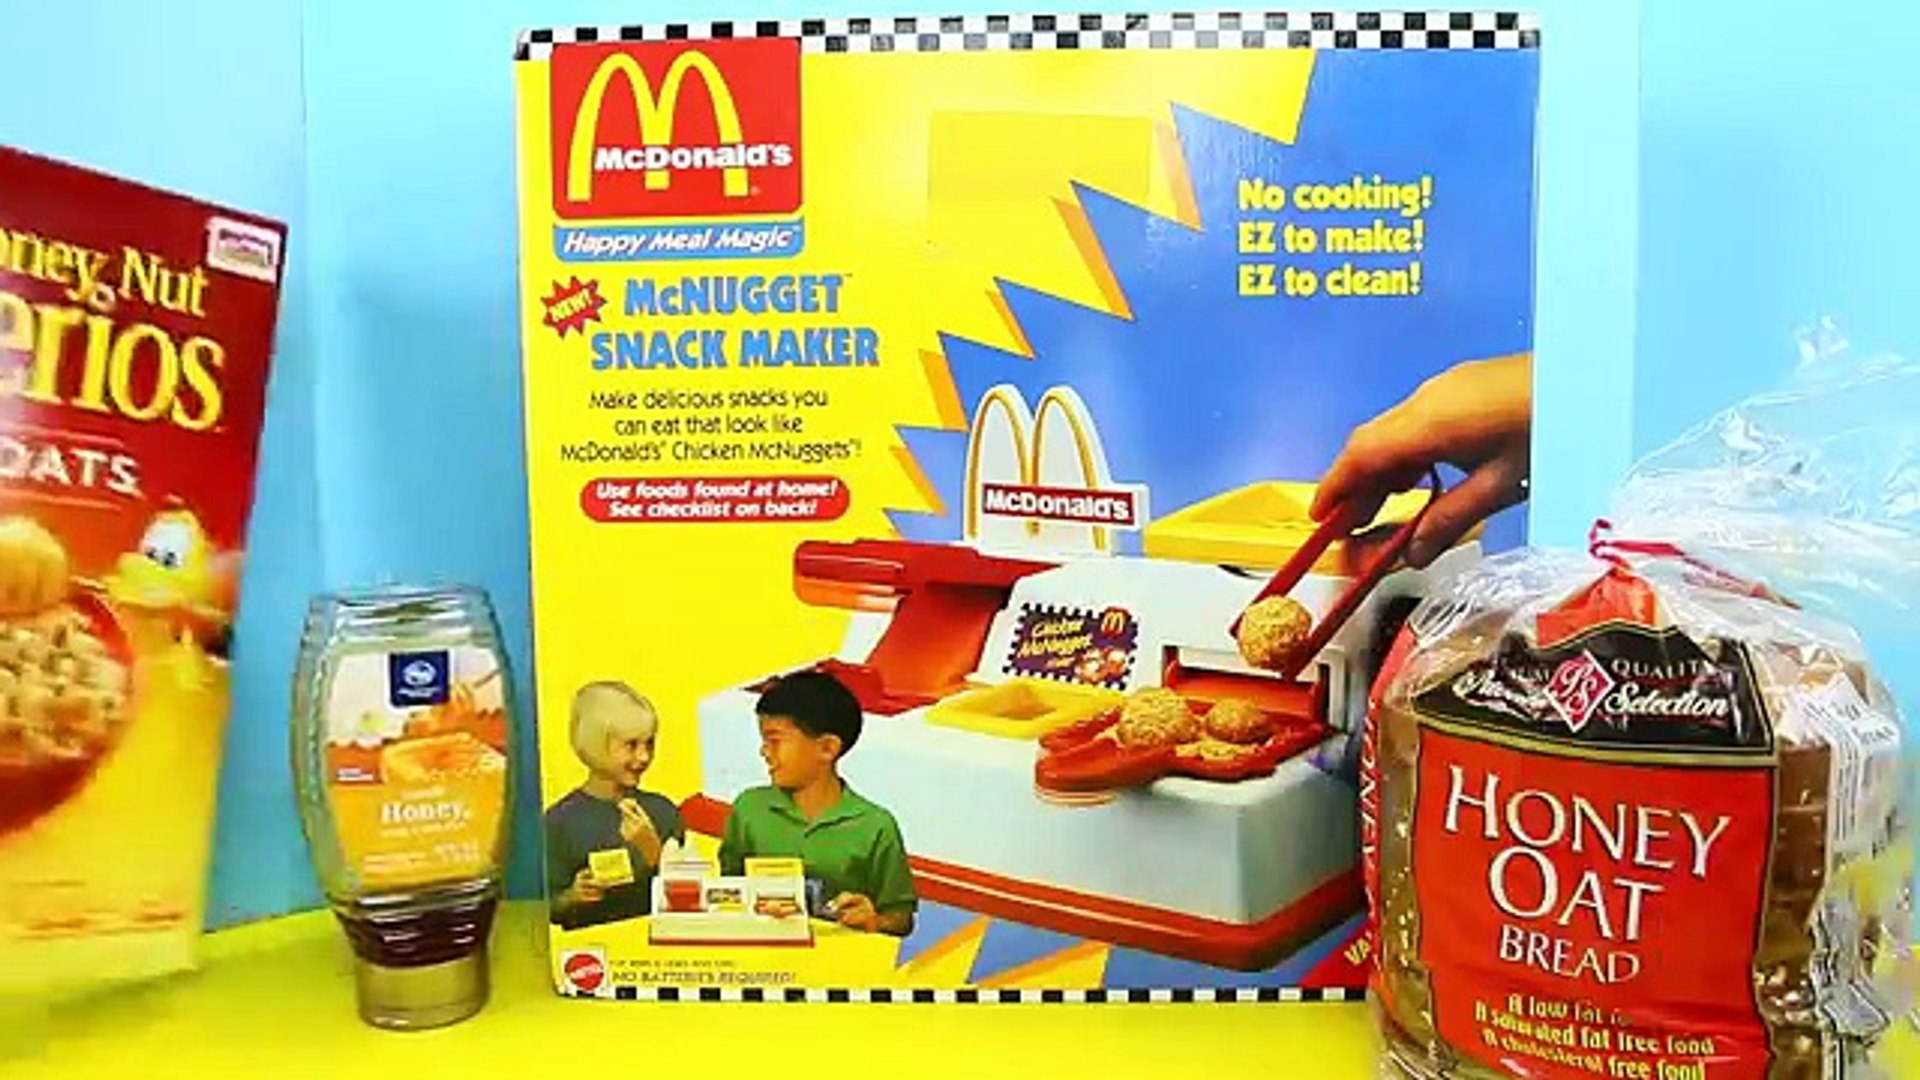 Mcdonald's French Fries Maker Happy Meal Magic Vintage McDonalds